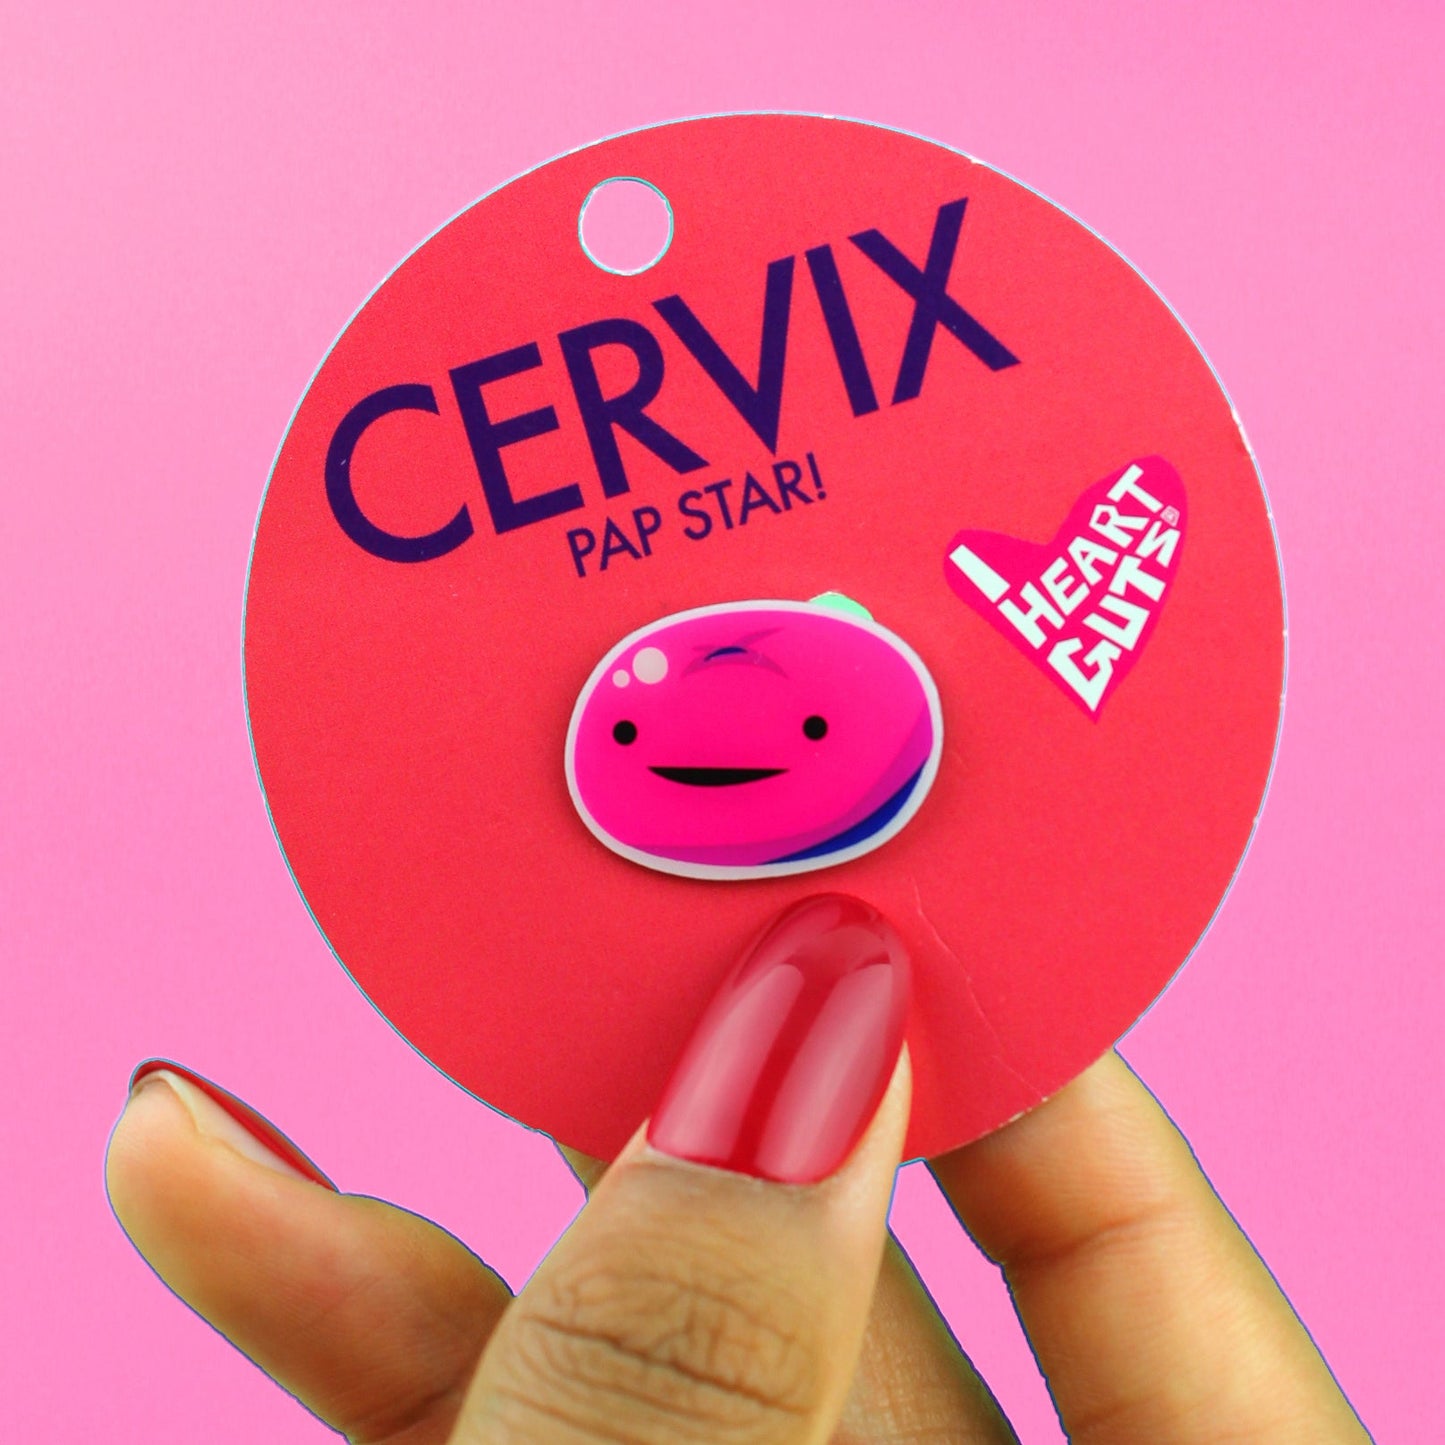 Cervix Lapel Pin - Pap Star